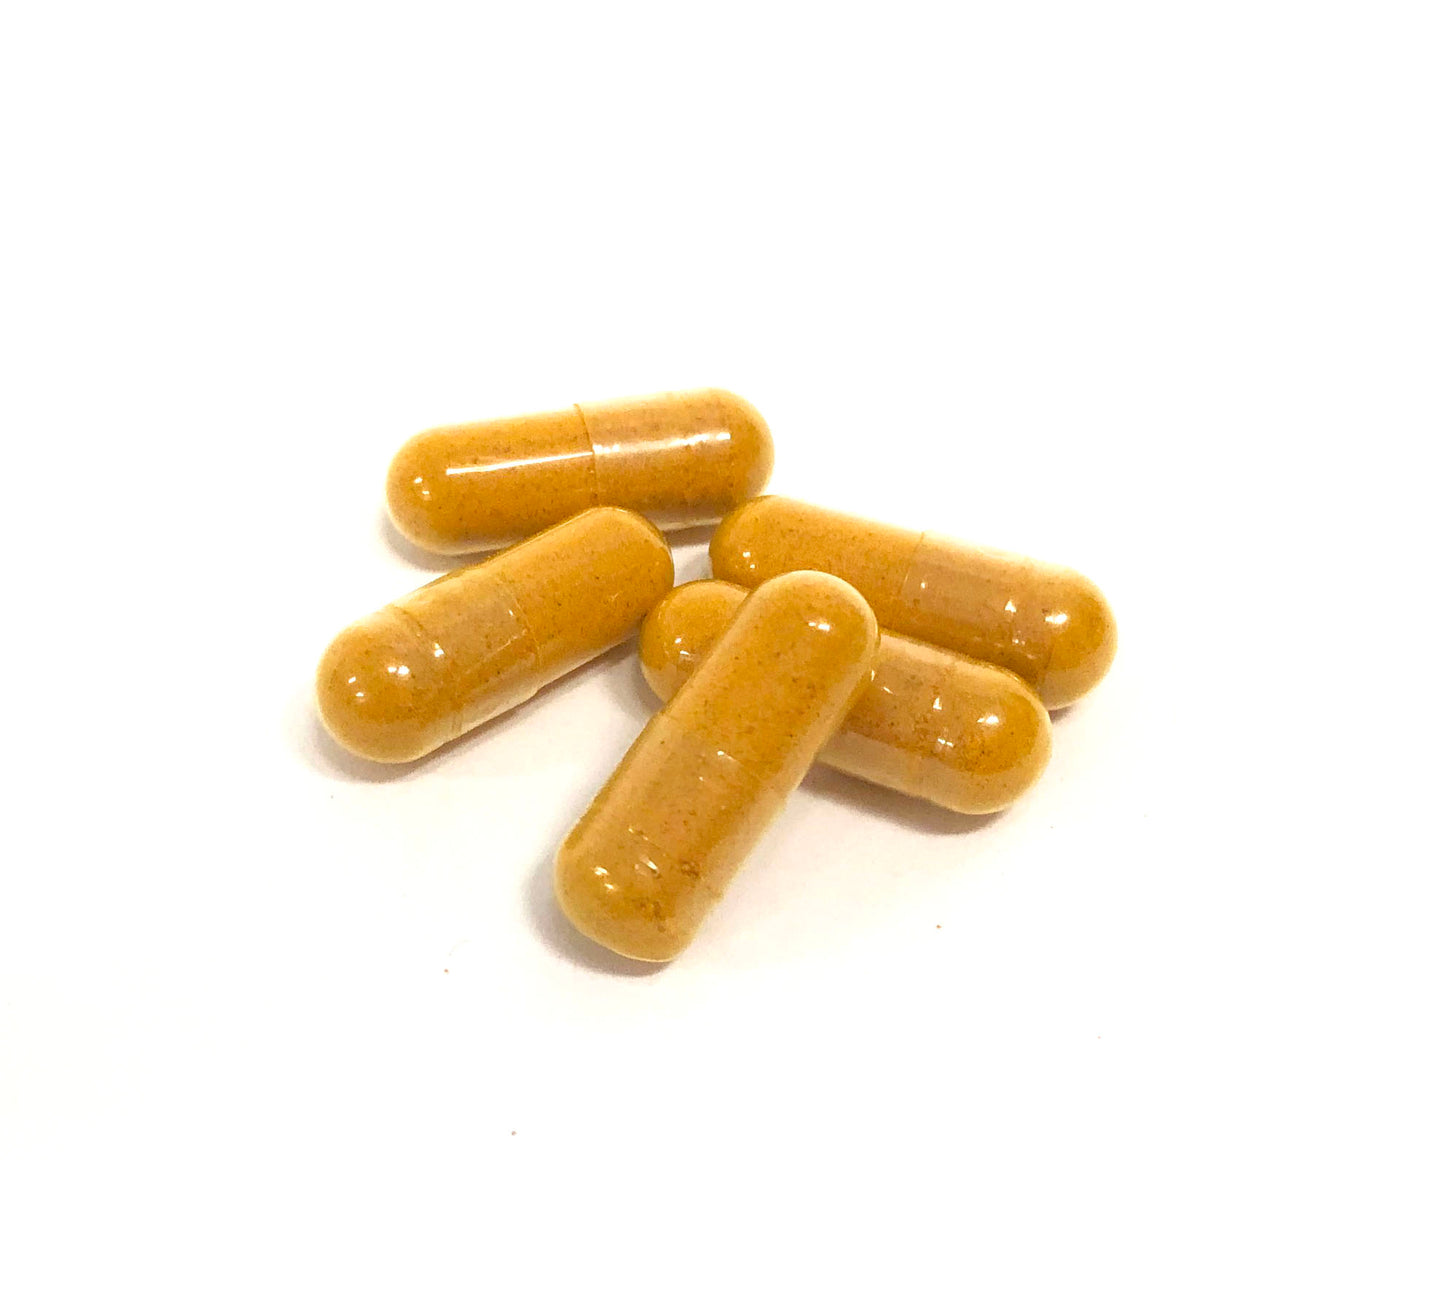 Wholesale Herbal Supplements - Turmeric